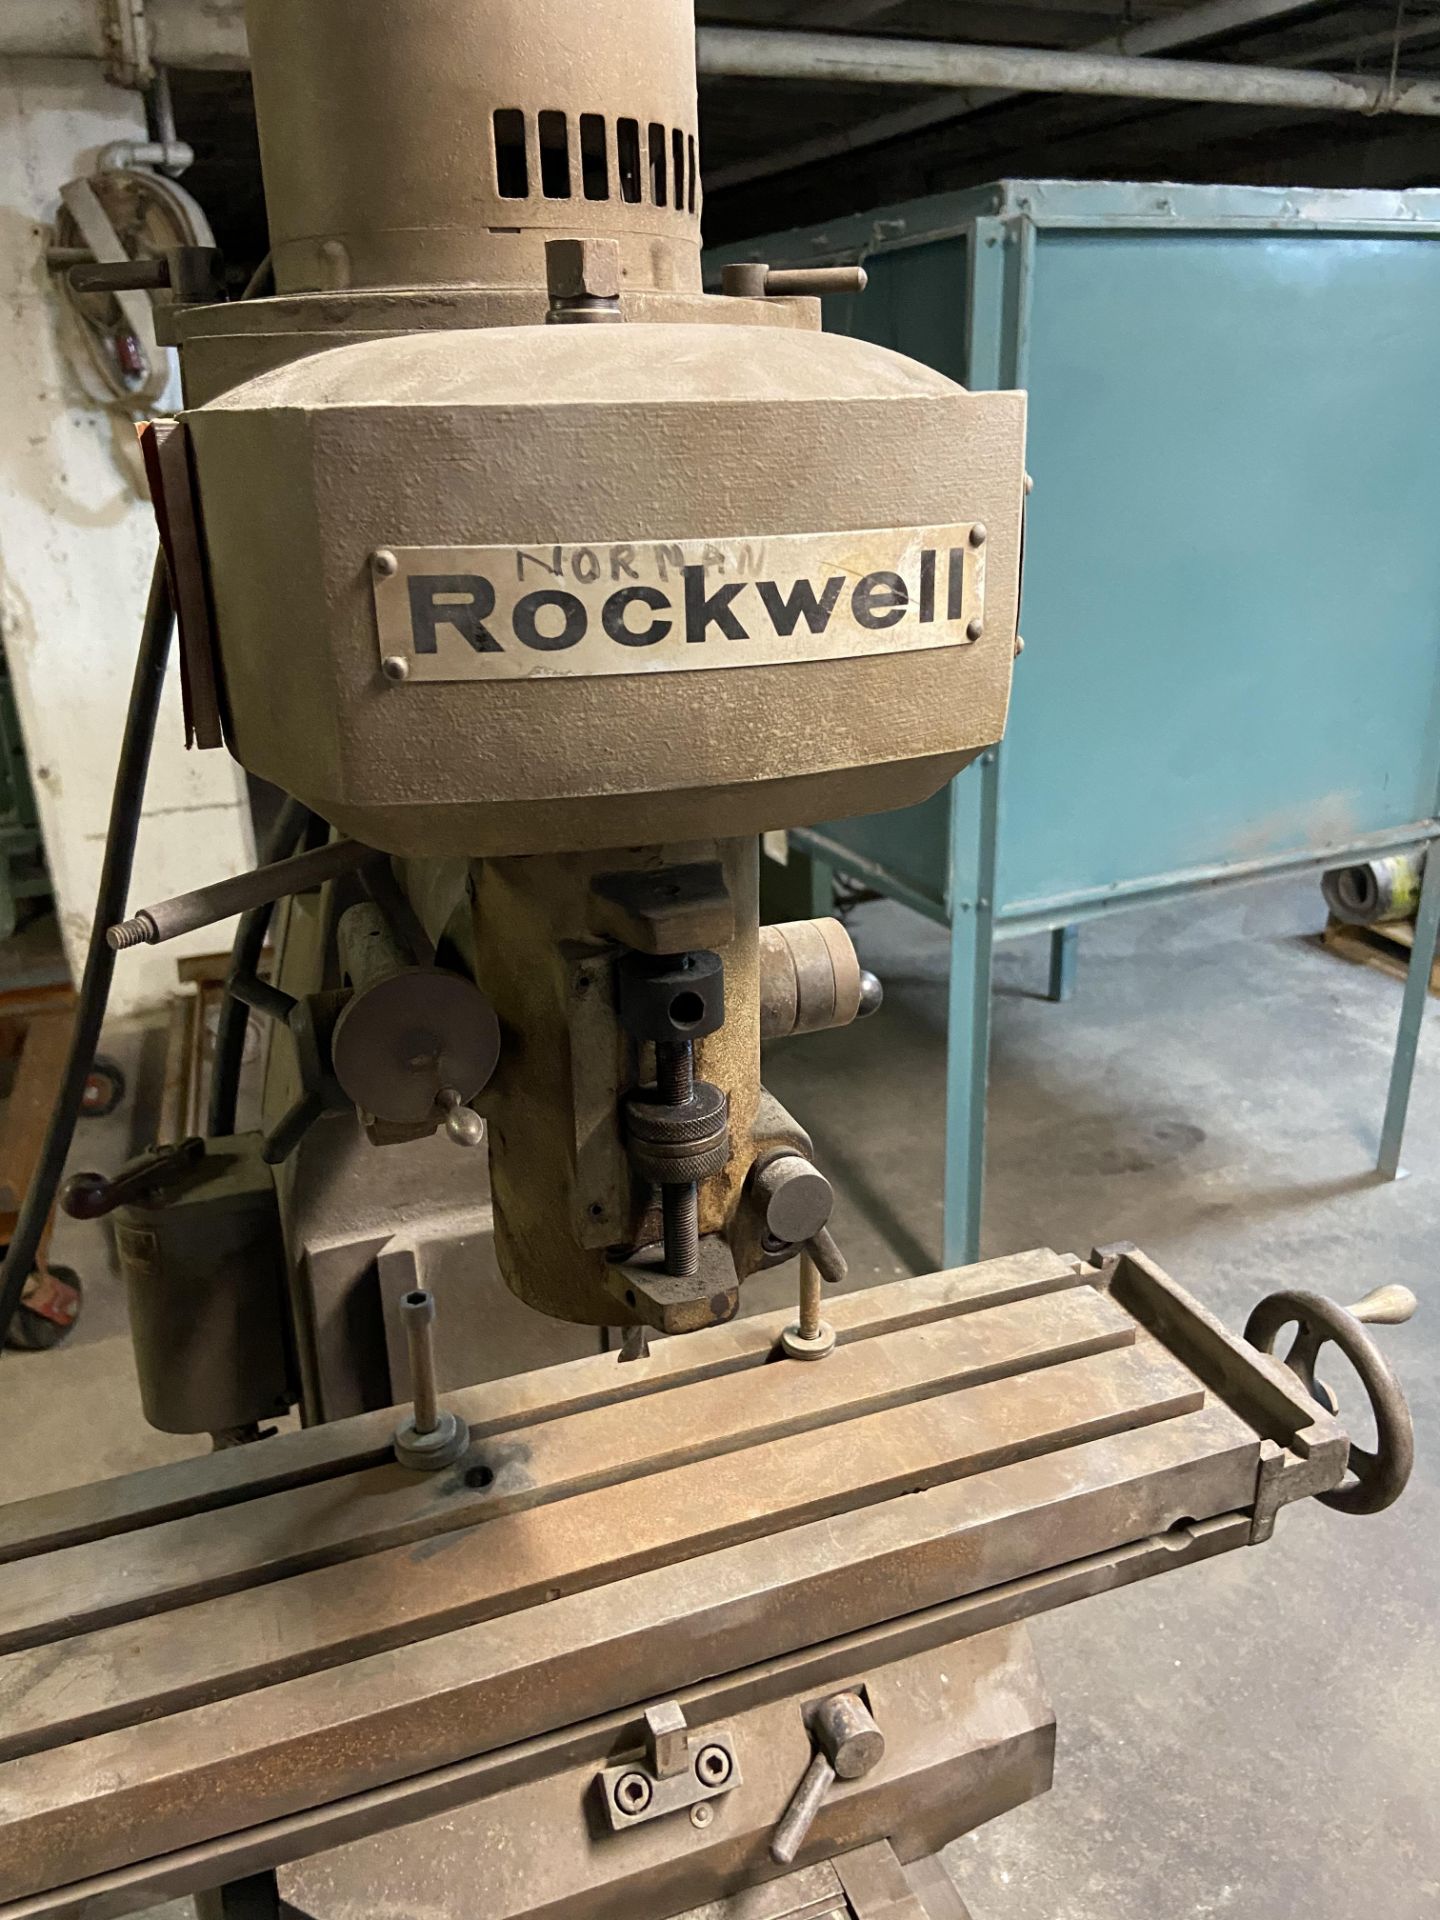 Rockwell Horizontal Vertical Milling Machine 21-120 - Image 2 of 3